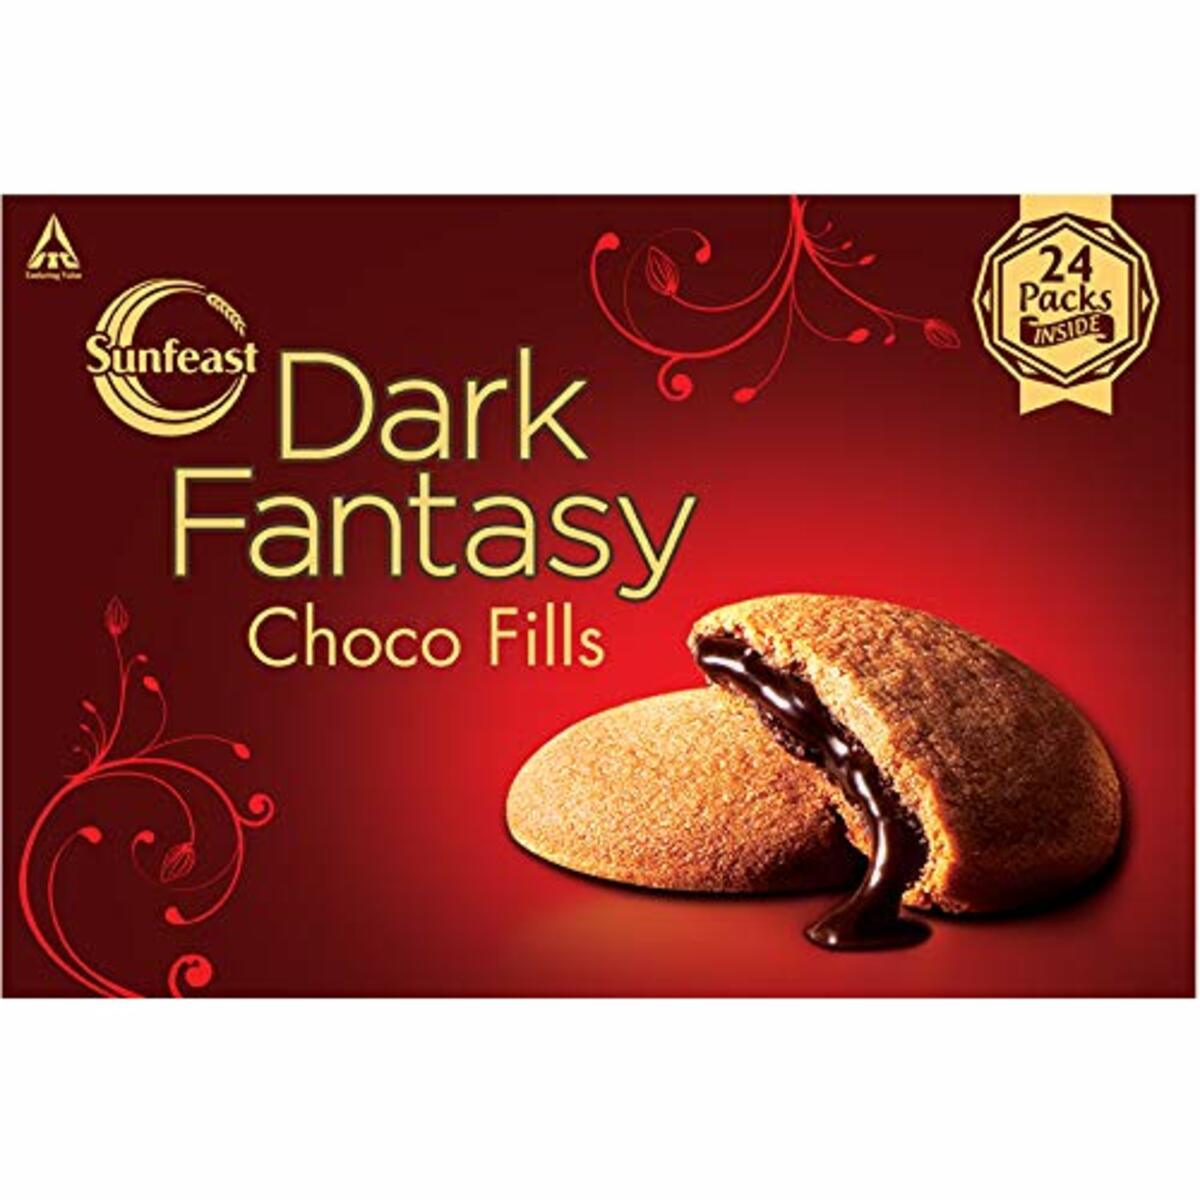 Sunfeast Dark Fantasy Choco Fills 300g